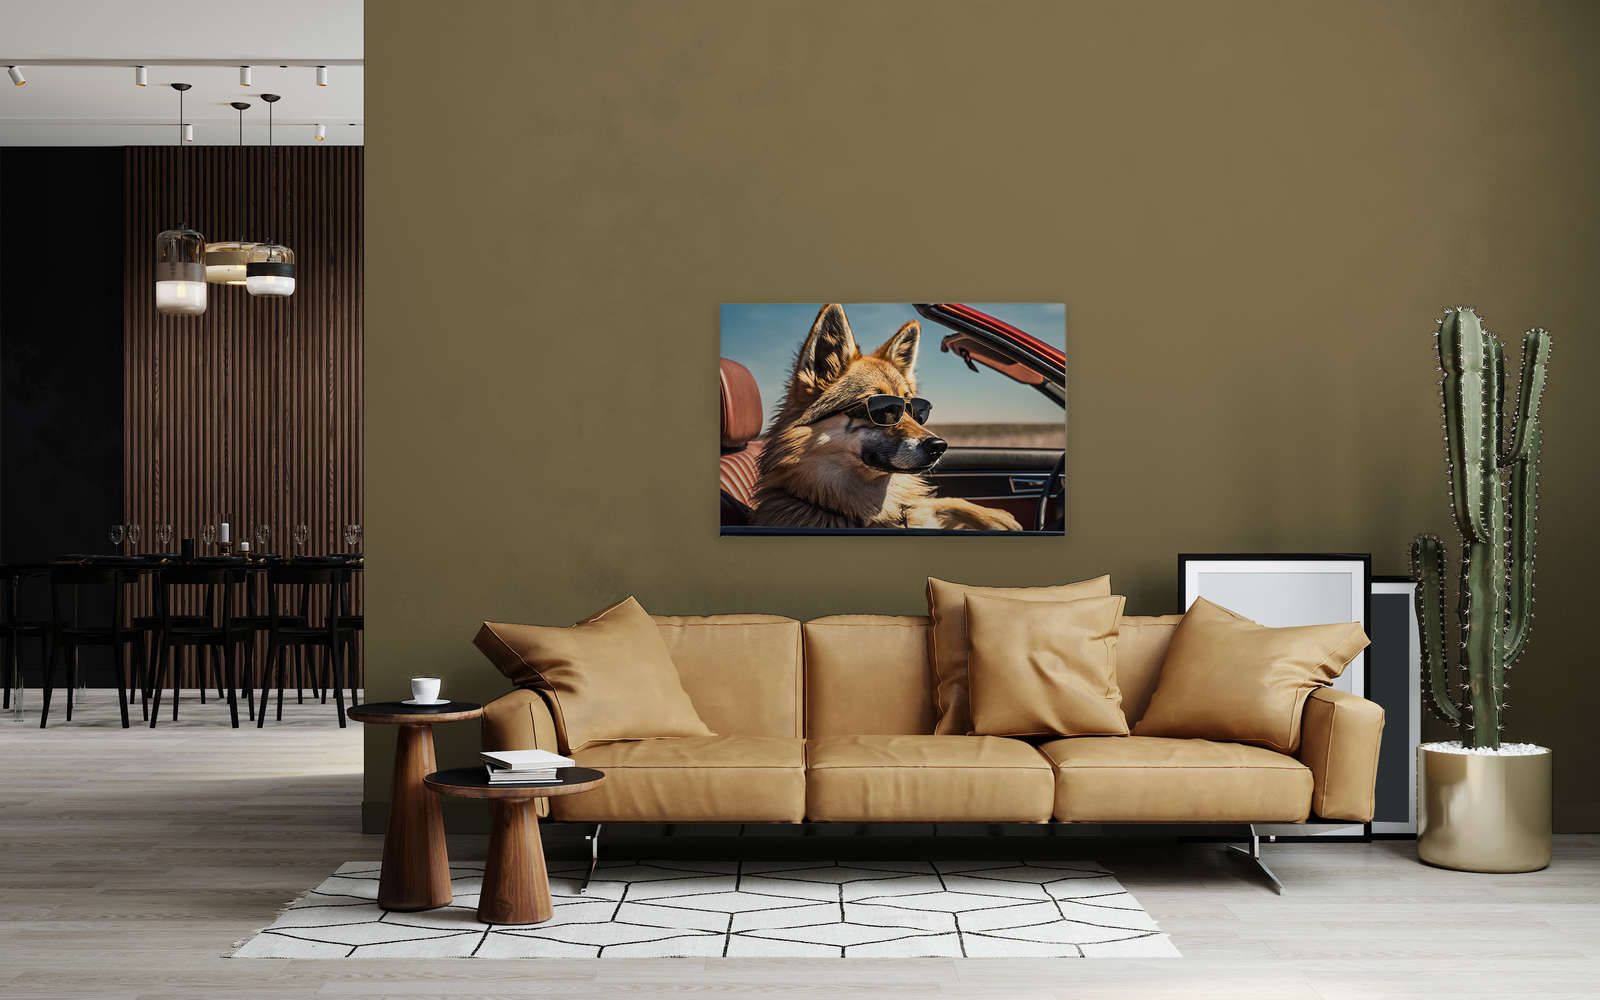             KI canvas schilderij »kruipende wolf« - 120 cm x 80 cm
        